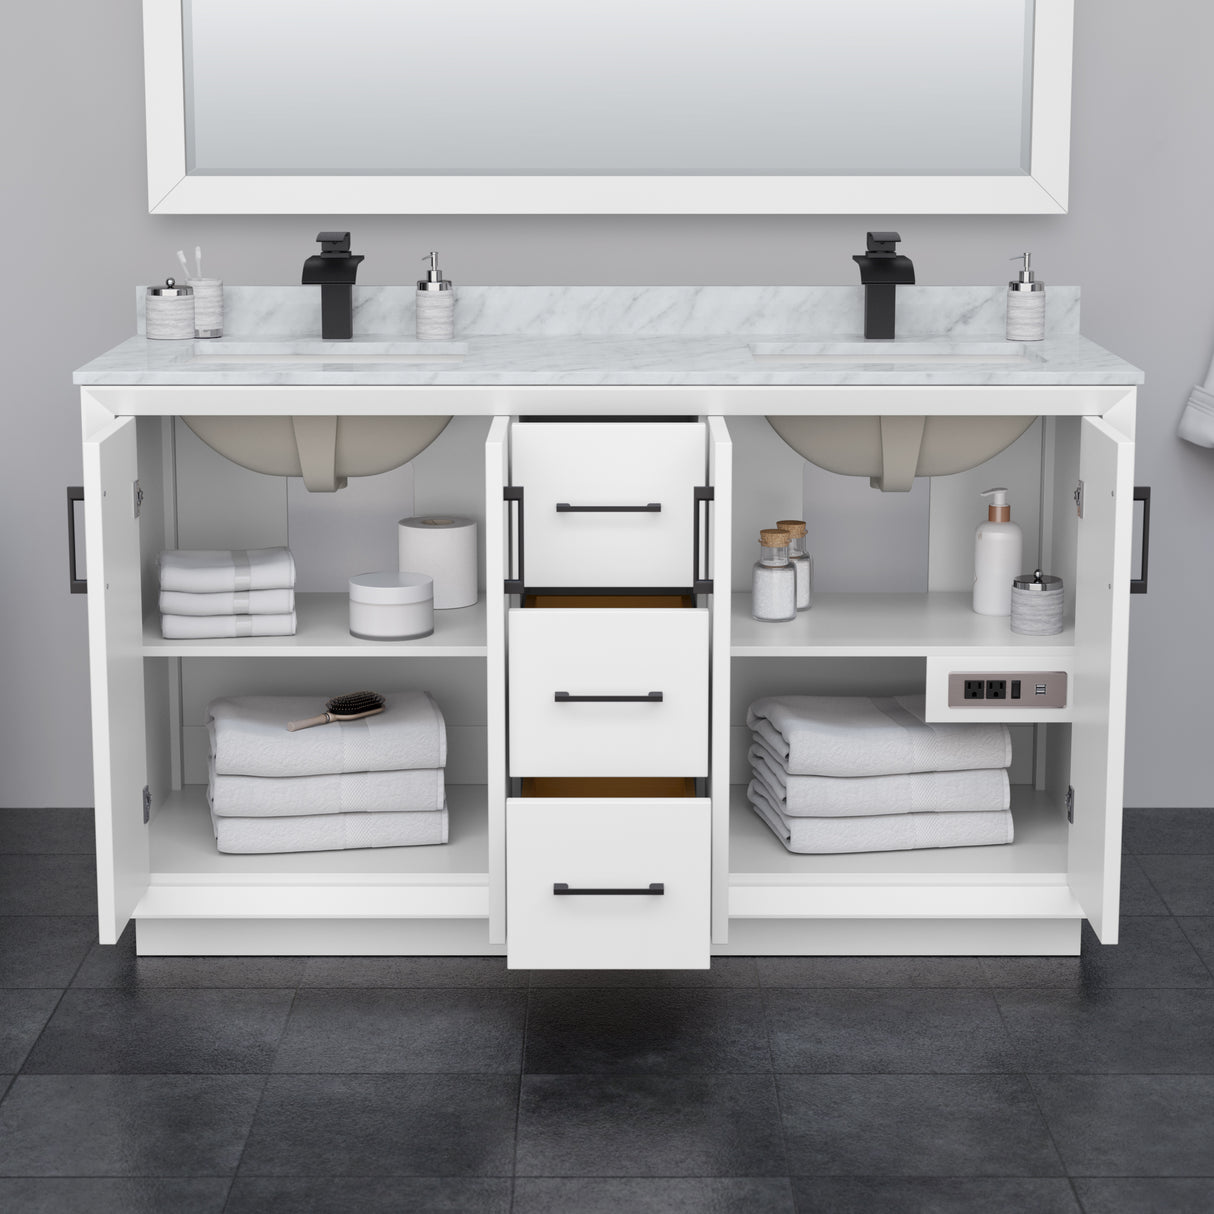 Strada 60 Inch Double Bathroom Vanity in White No Countertop No Sink Brushed Nickel Trim 58 Inch Mirror